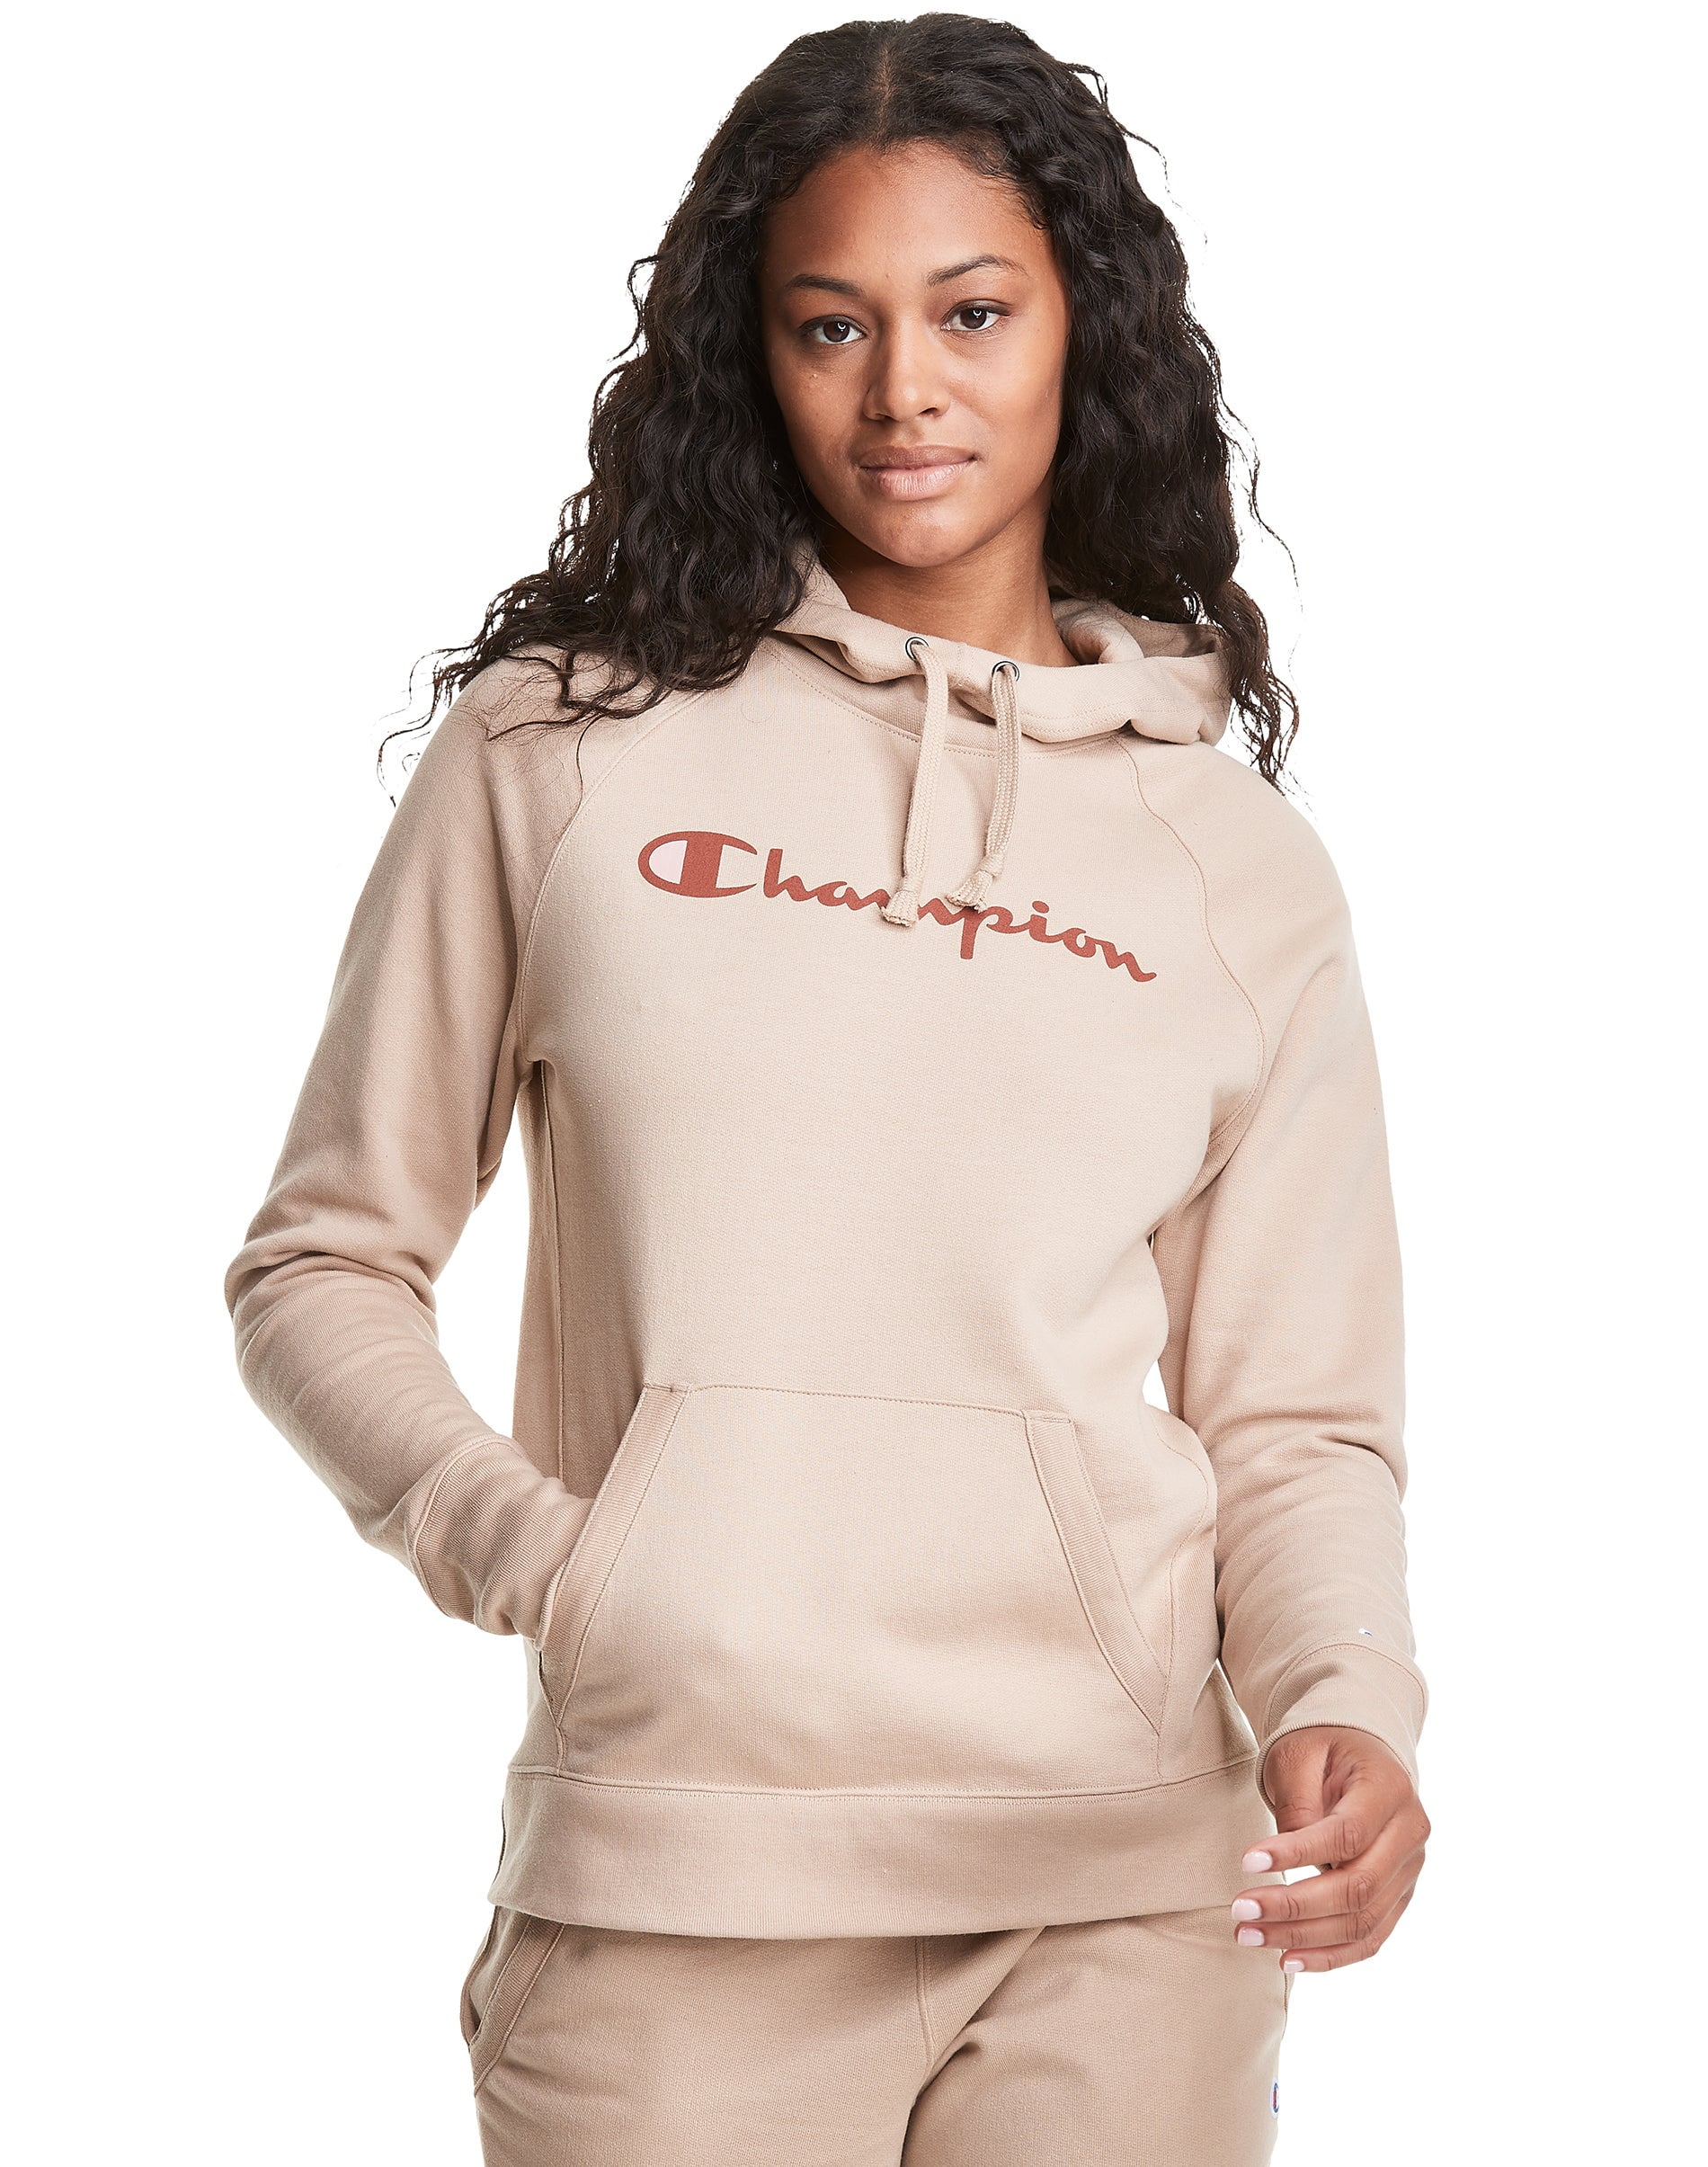 voorstel speelplaats Emulatie Champion Women Hooded Long Sleeve athletic hoodies - Walmart.com